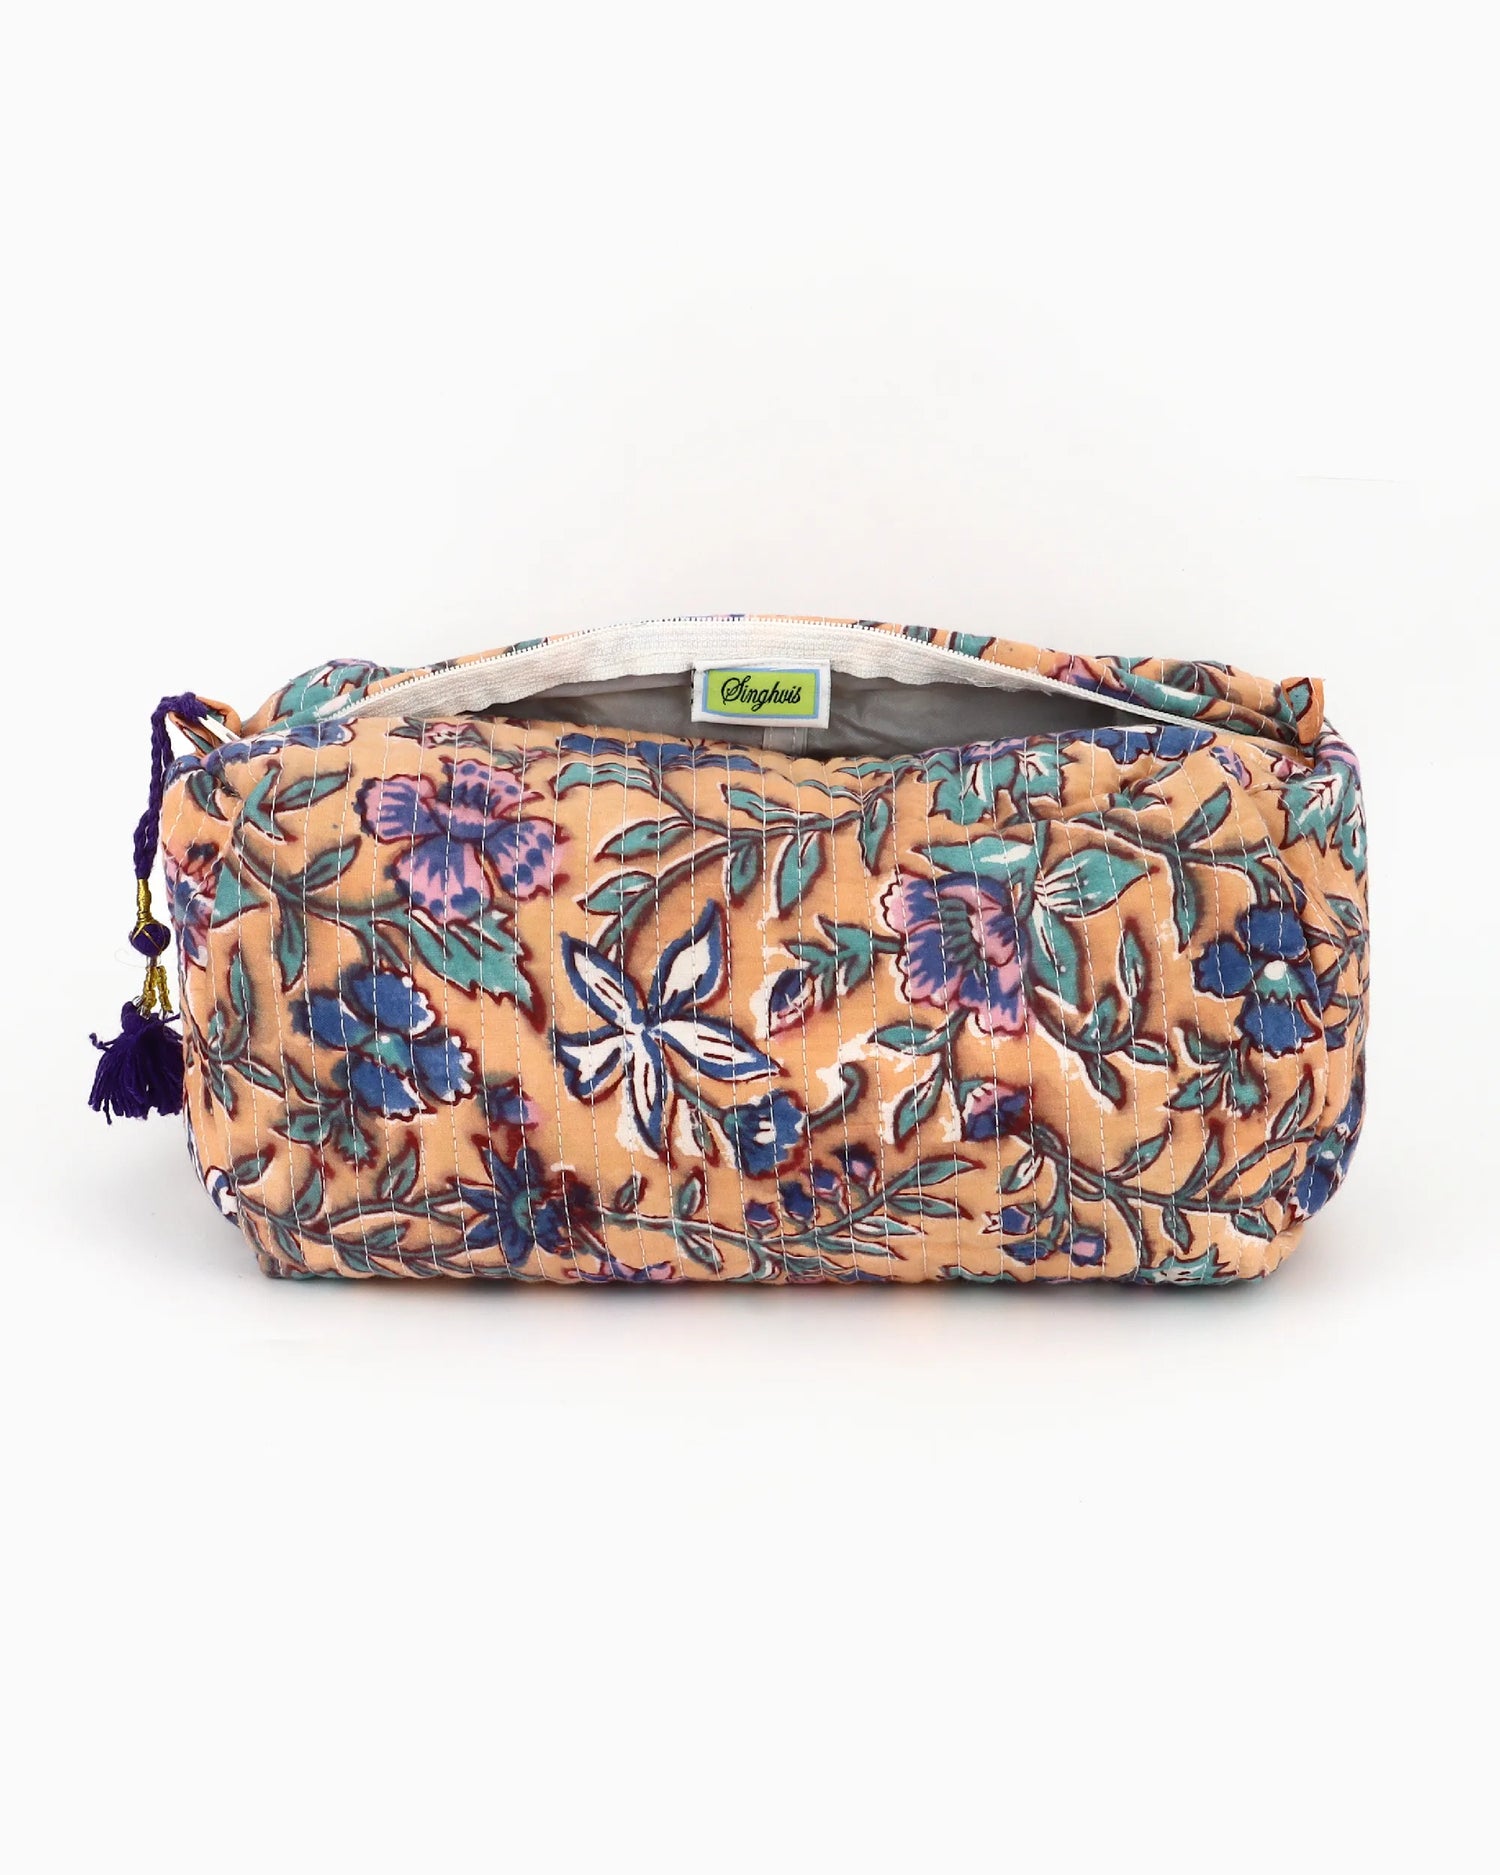 Celosia Cosmetic Bag